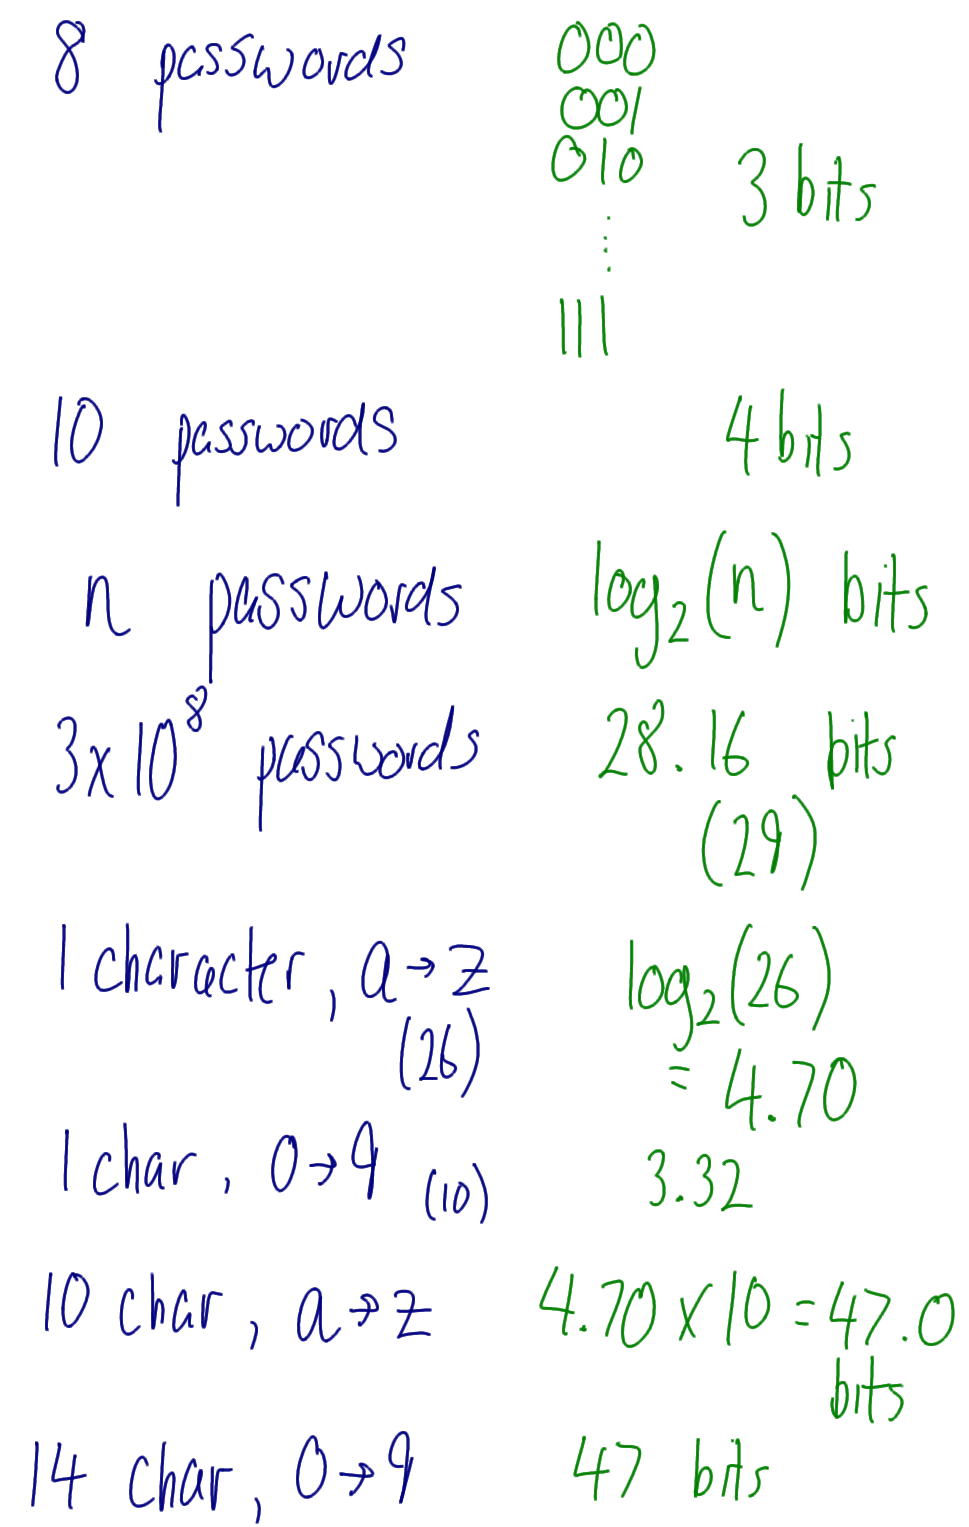 Password entropy examples